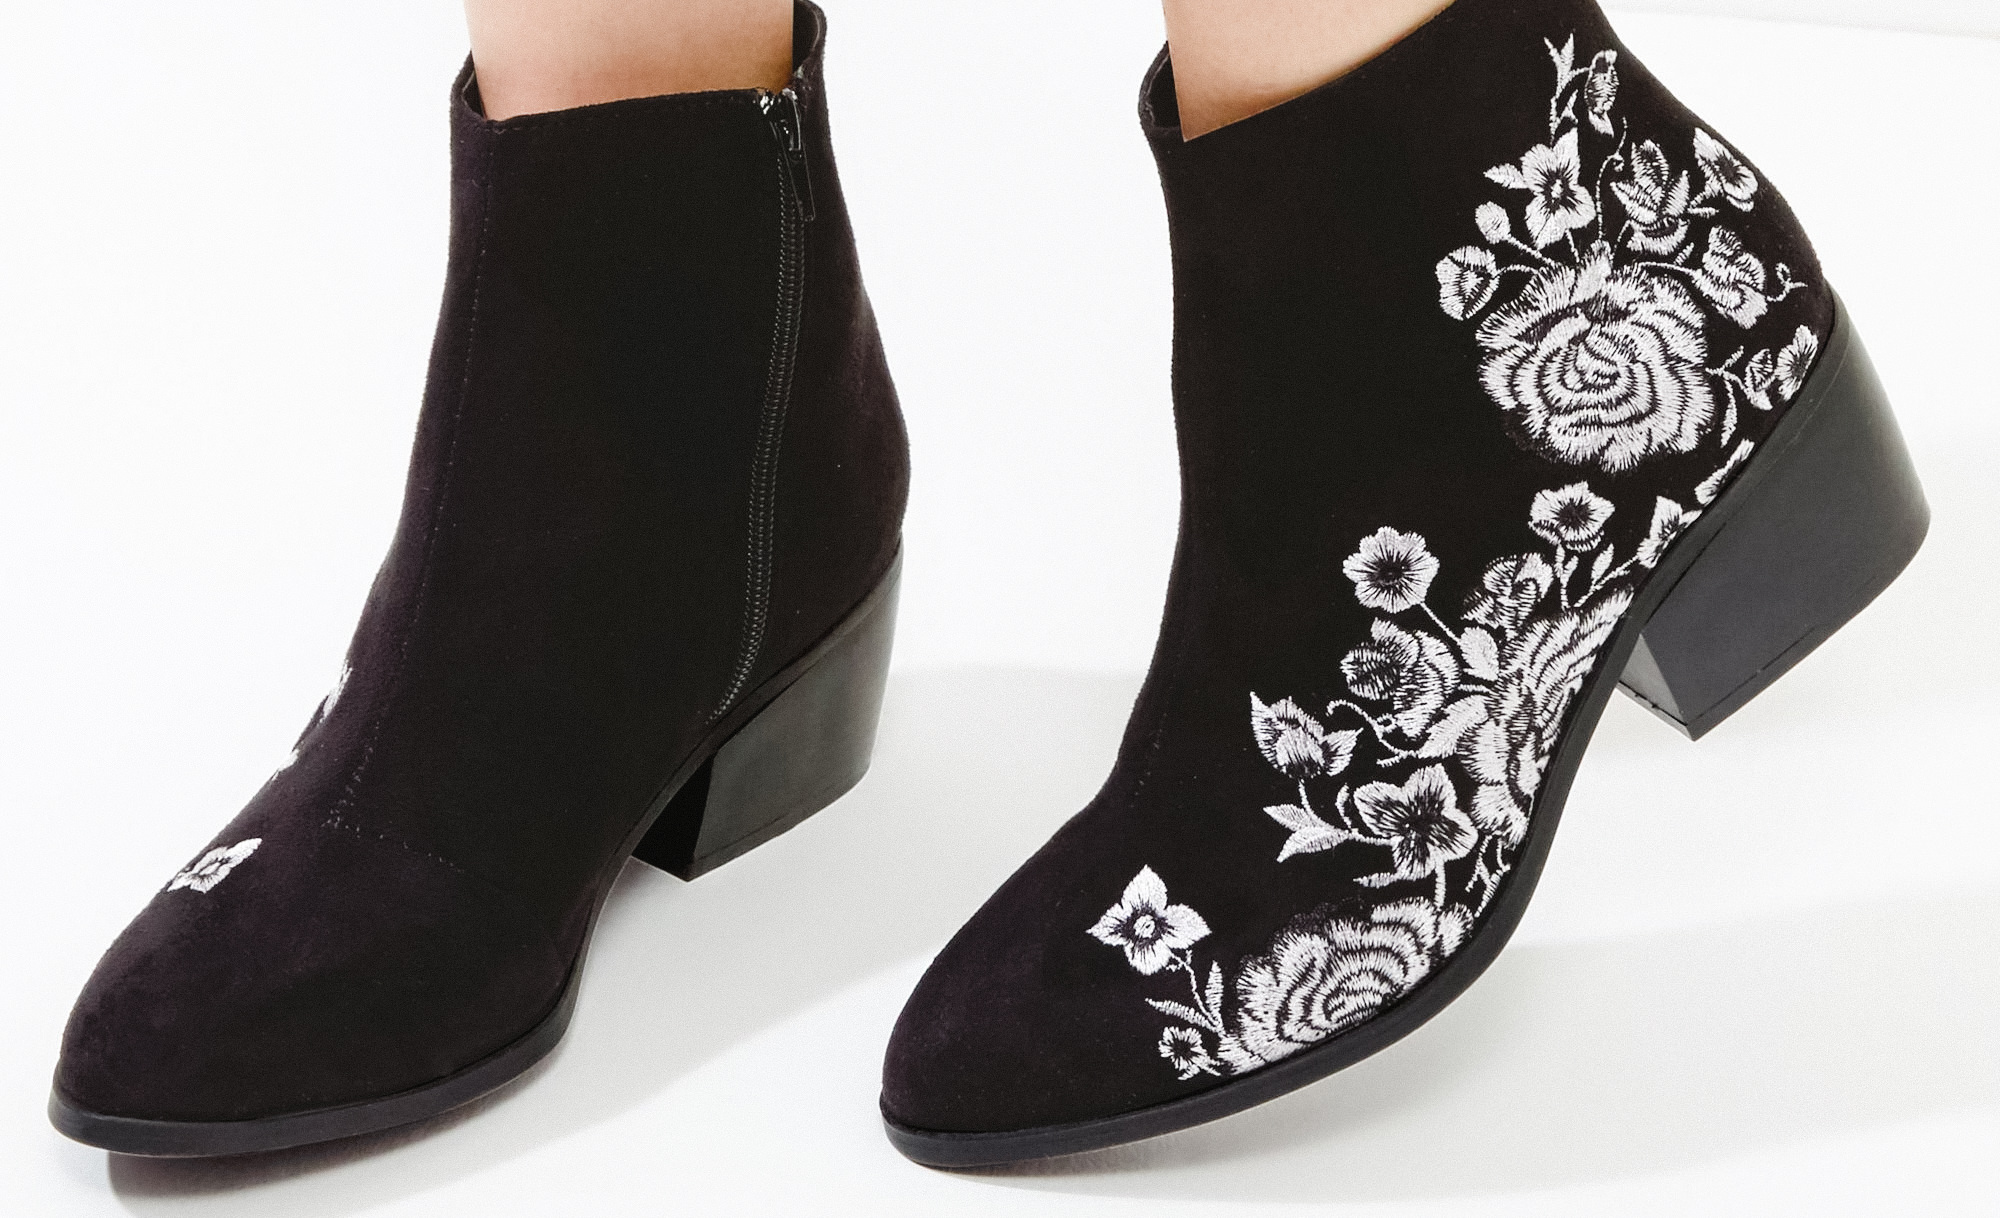 Comfy Heels For Women | Stilettos & High Heels | ALDO Canada